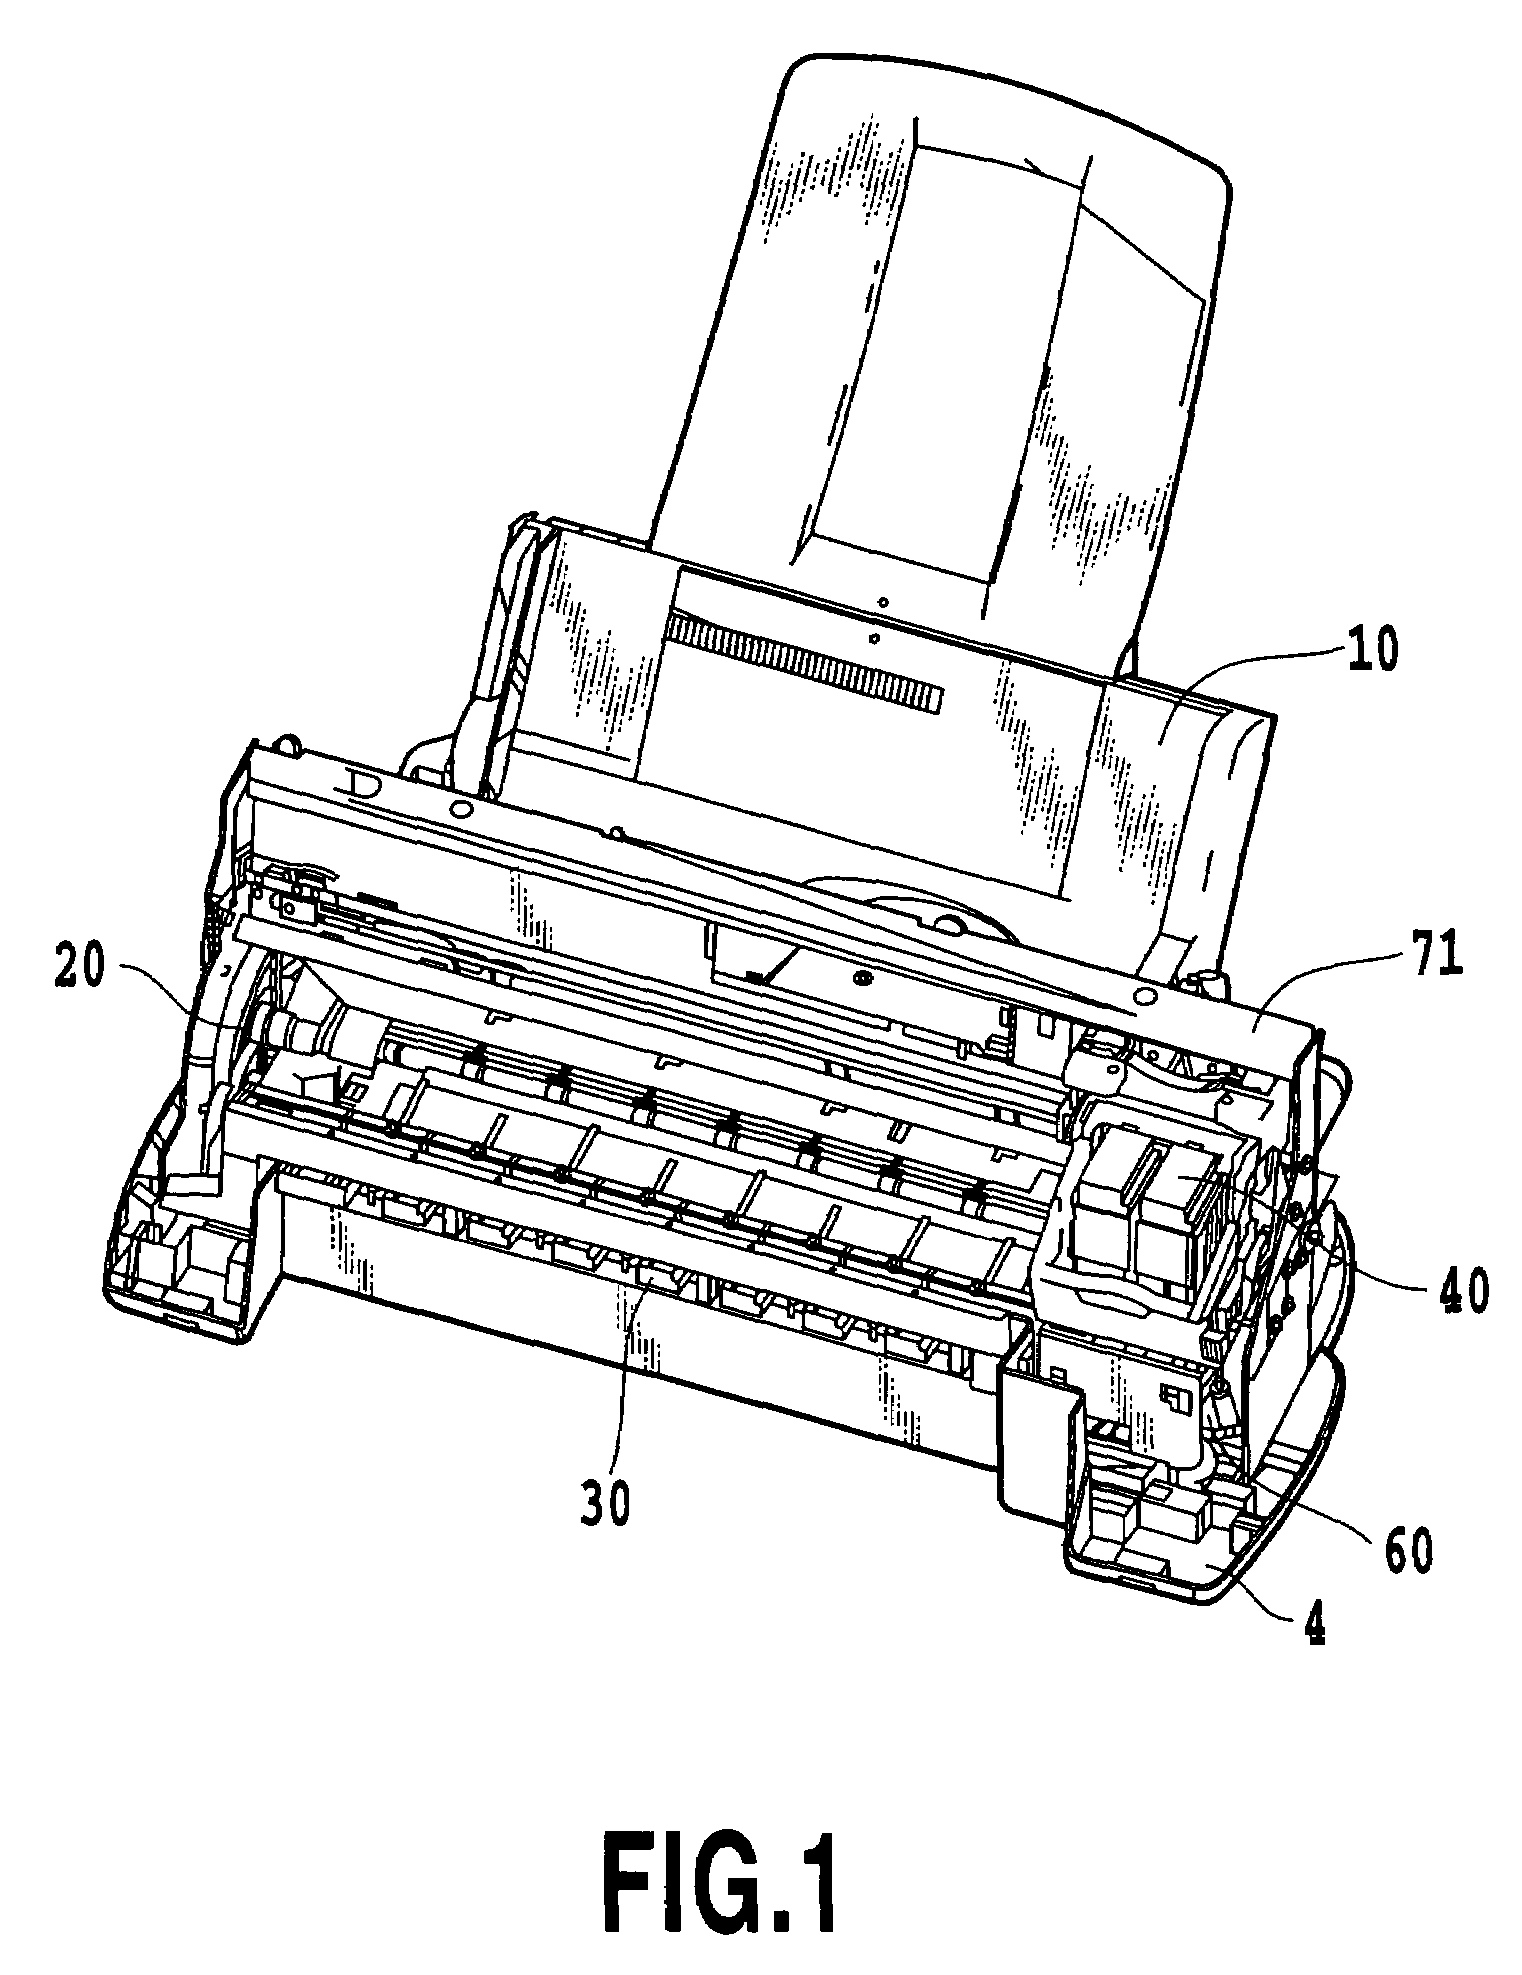 Ink-jet printing apparatus